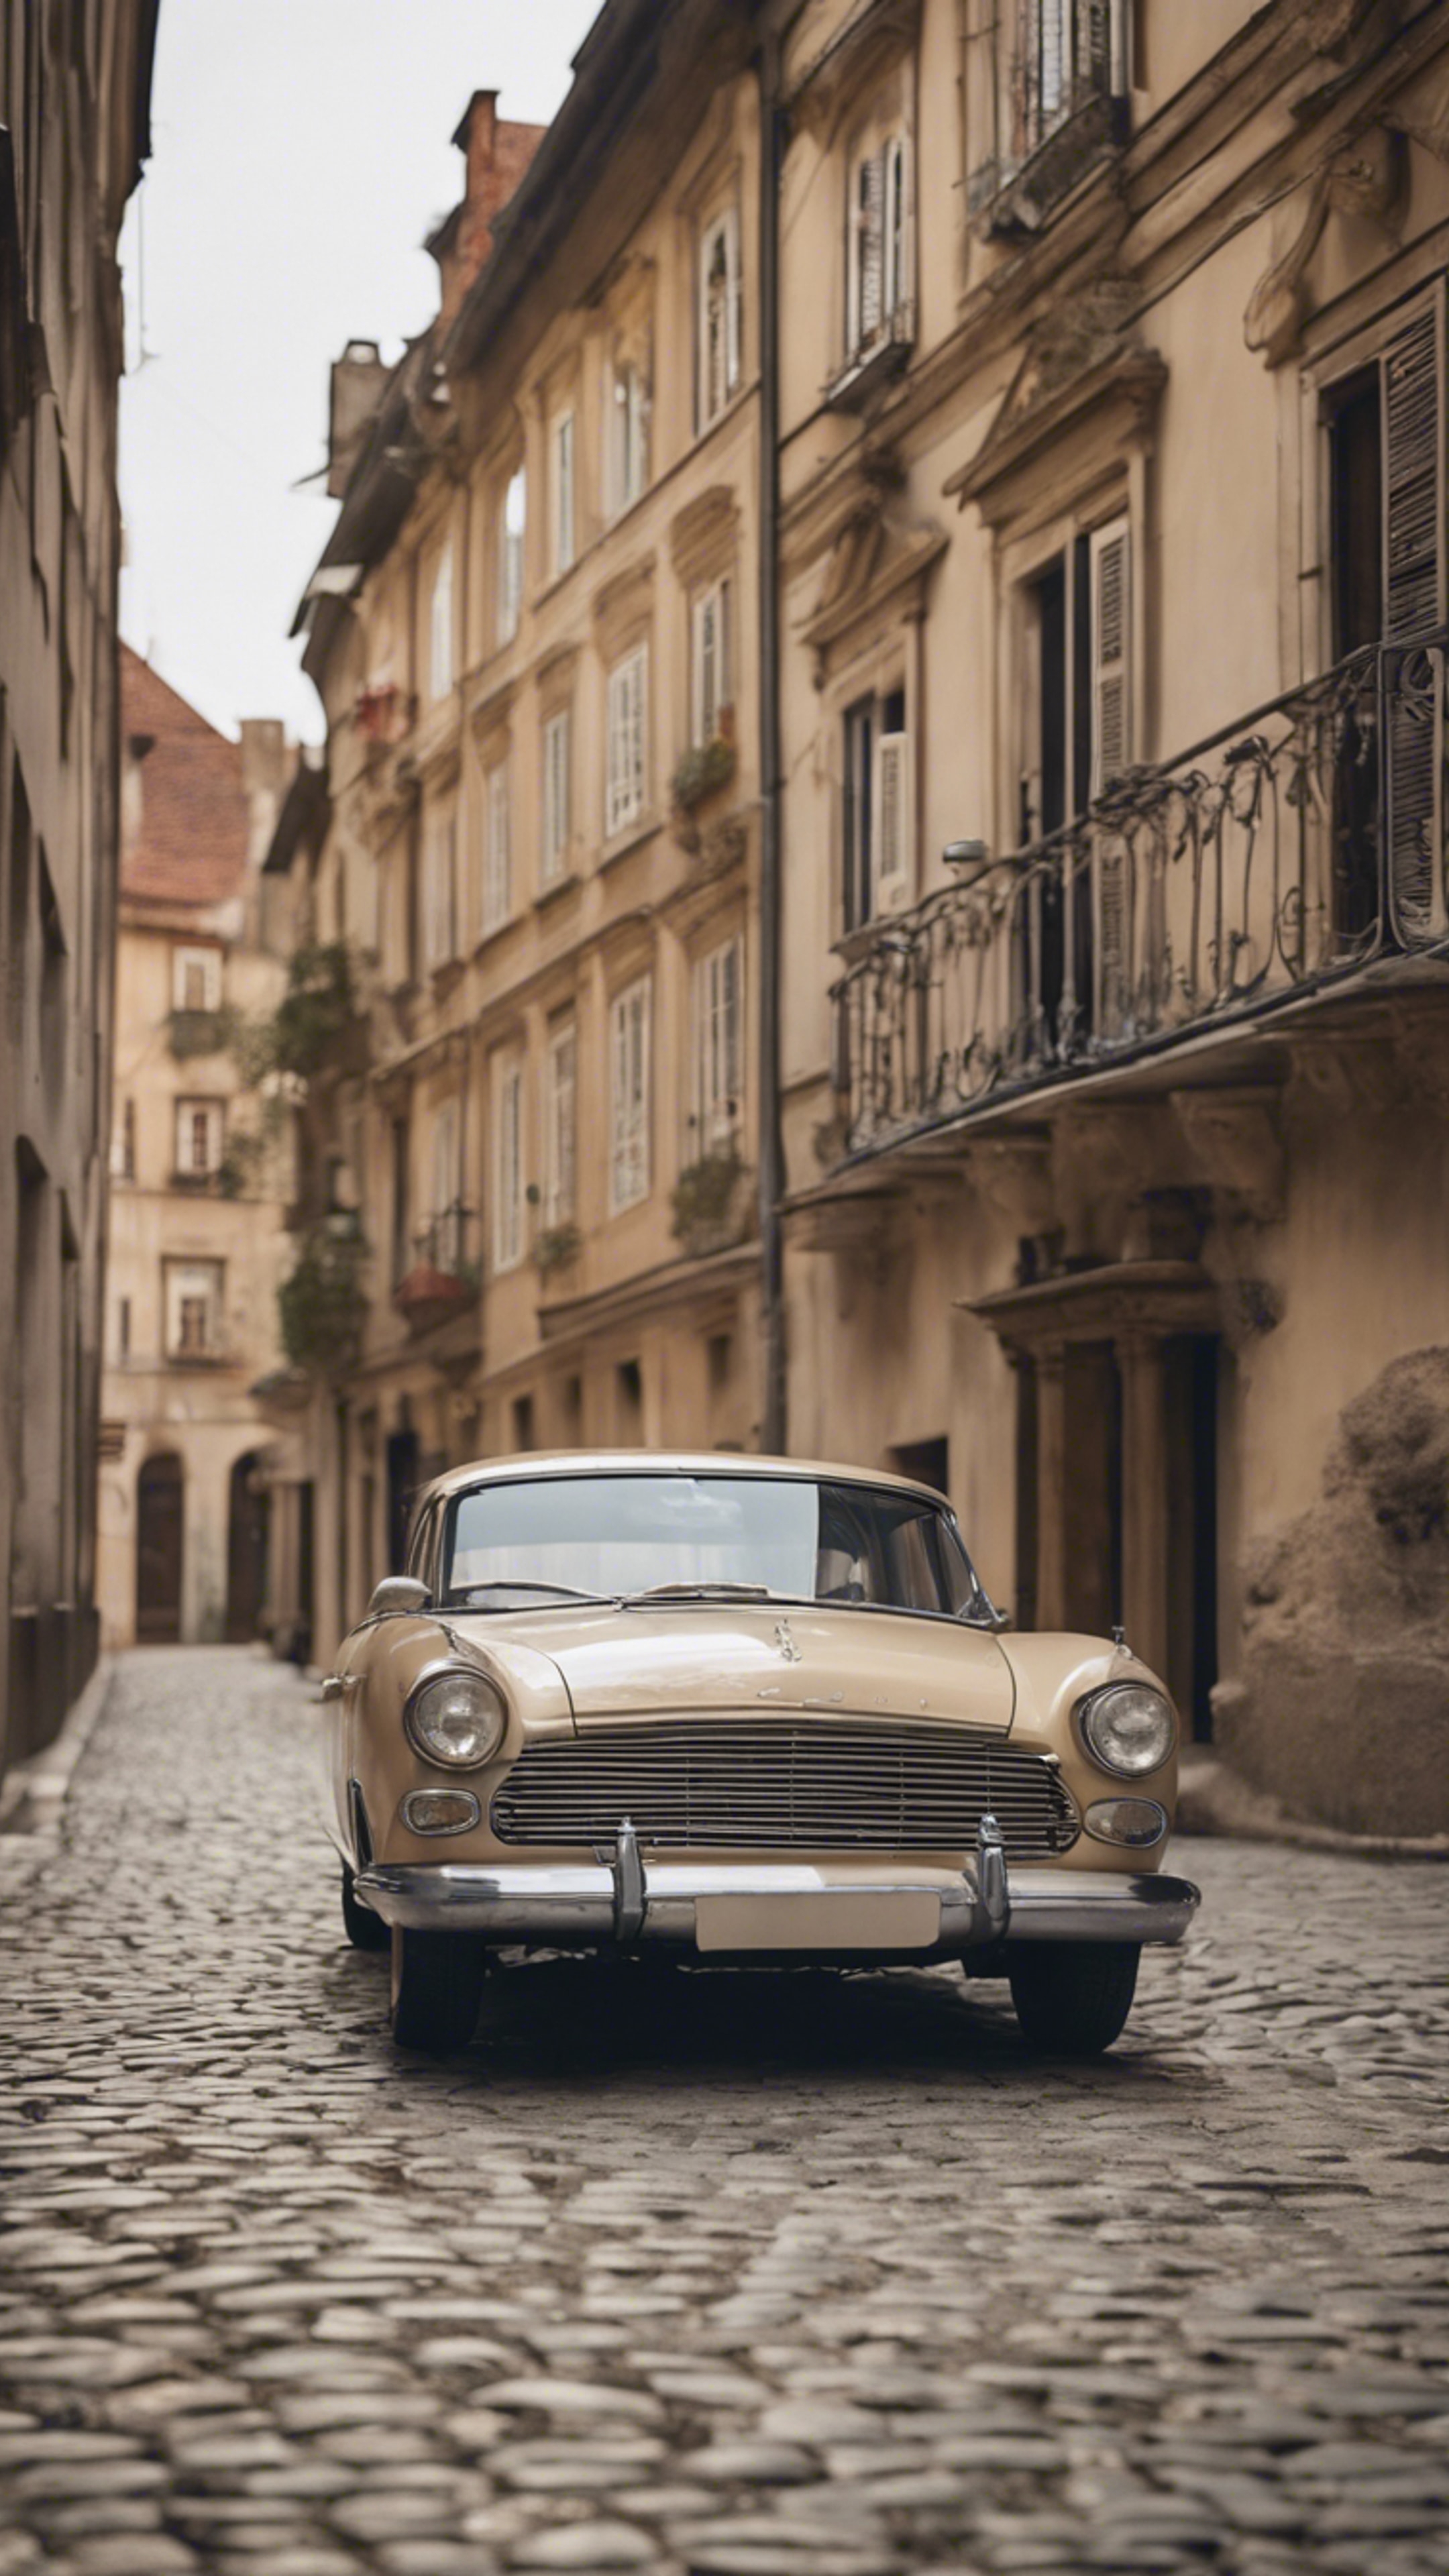 A beige classic car parked on a cobblestone street with rustic buildings in the background. Divar kağızı[31a873a8b96b4be69c6a]